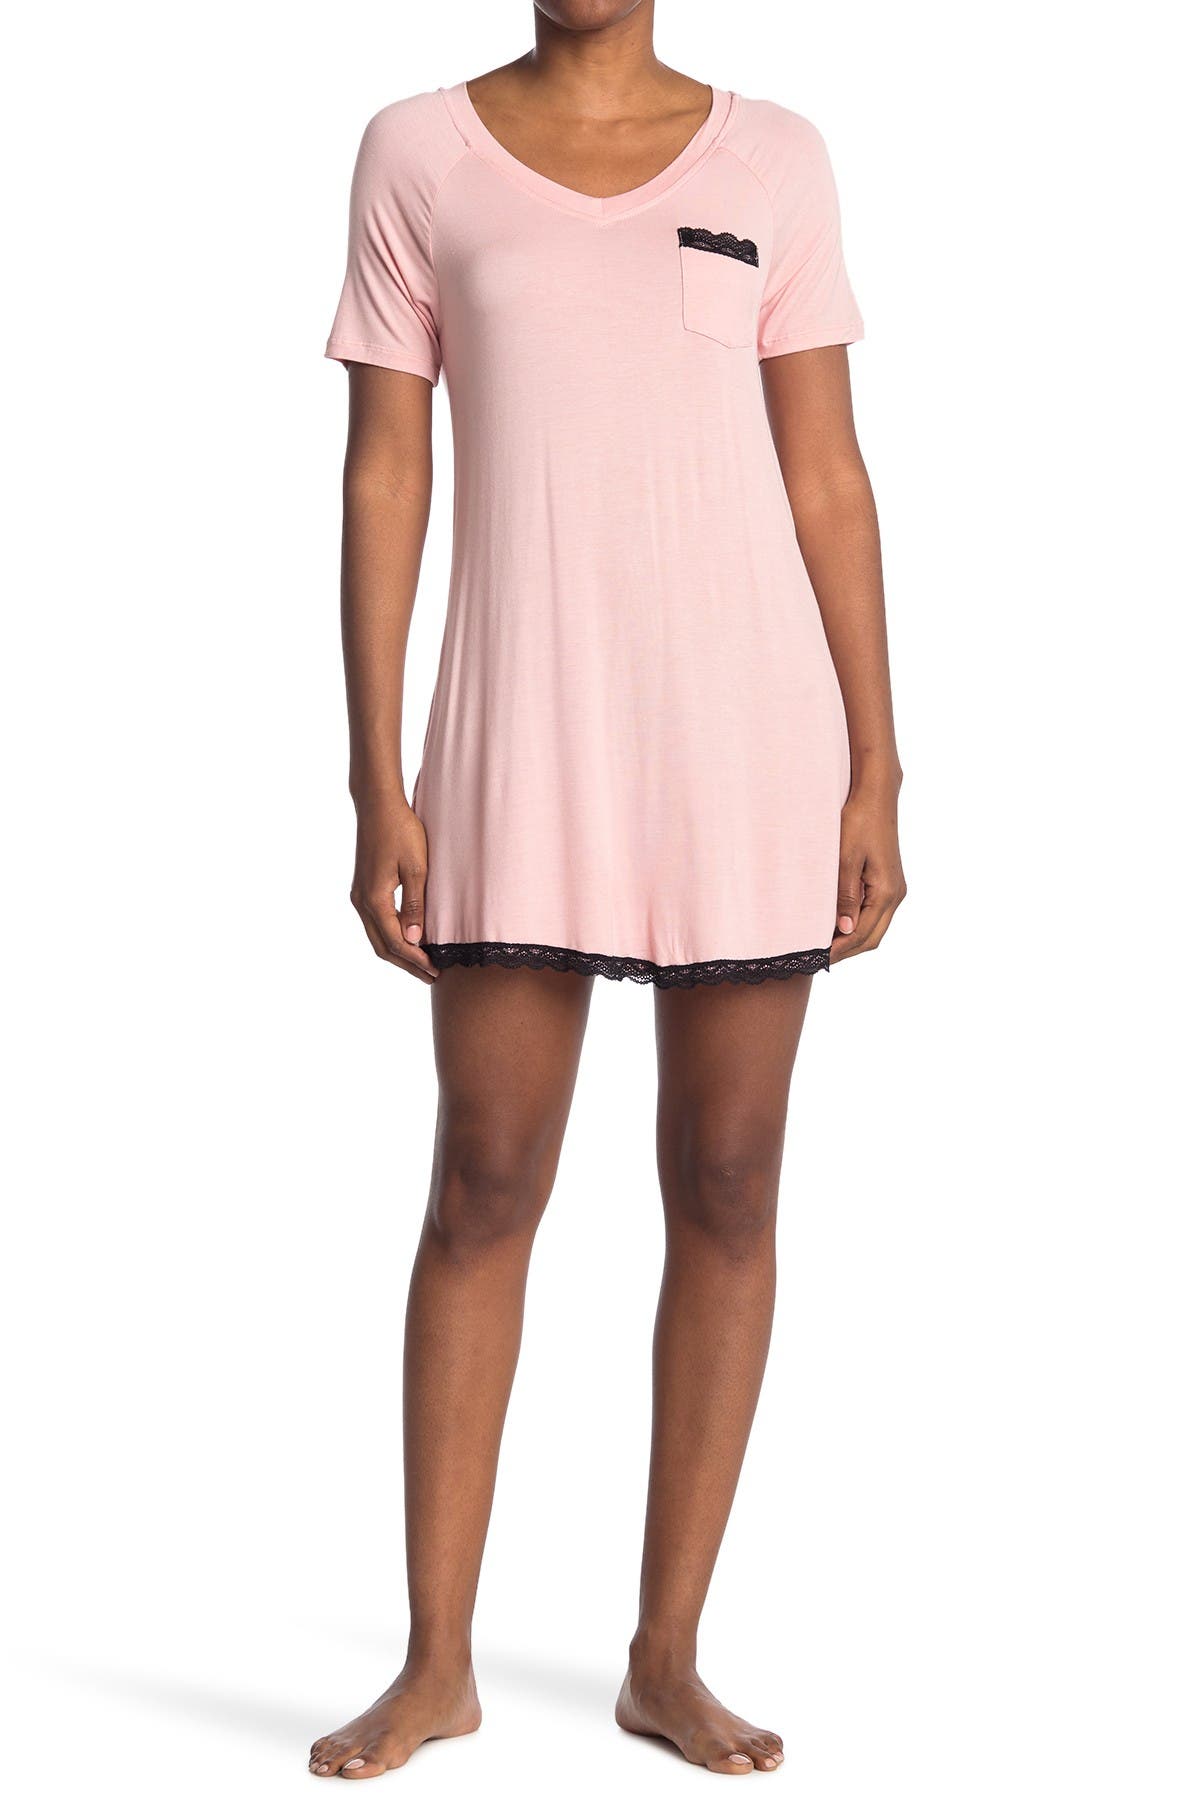 Honeydew Intimates Patterned Lace Trim Sleep Shirt In Medium Pink4